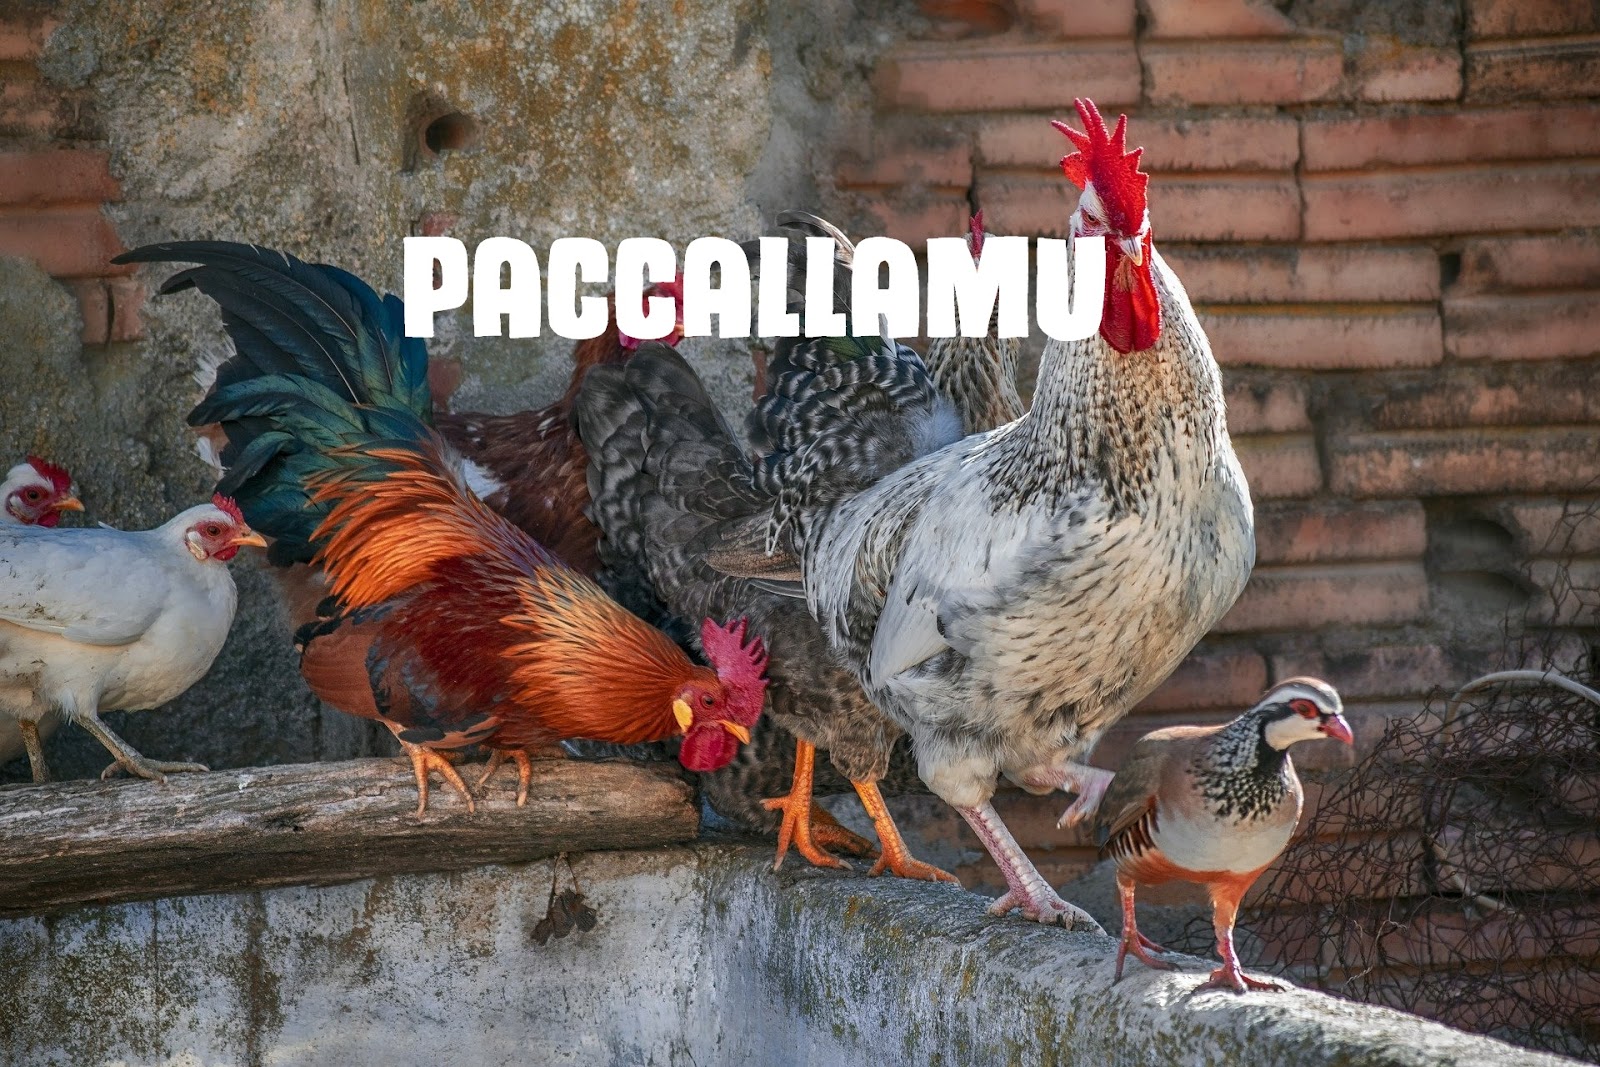 Lirik lagu Bugis : Paccallamu | Maluccana